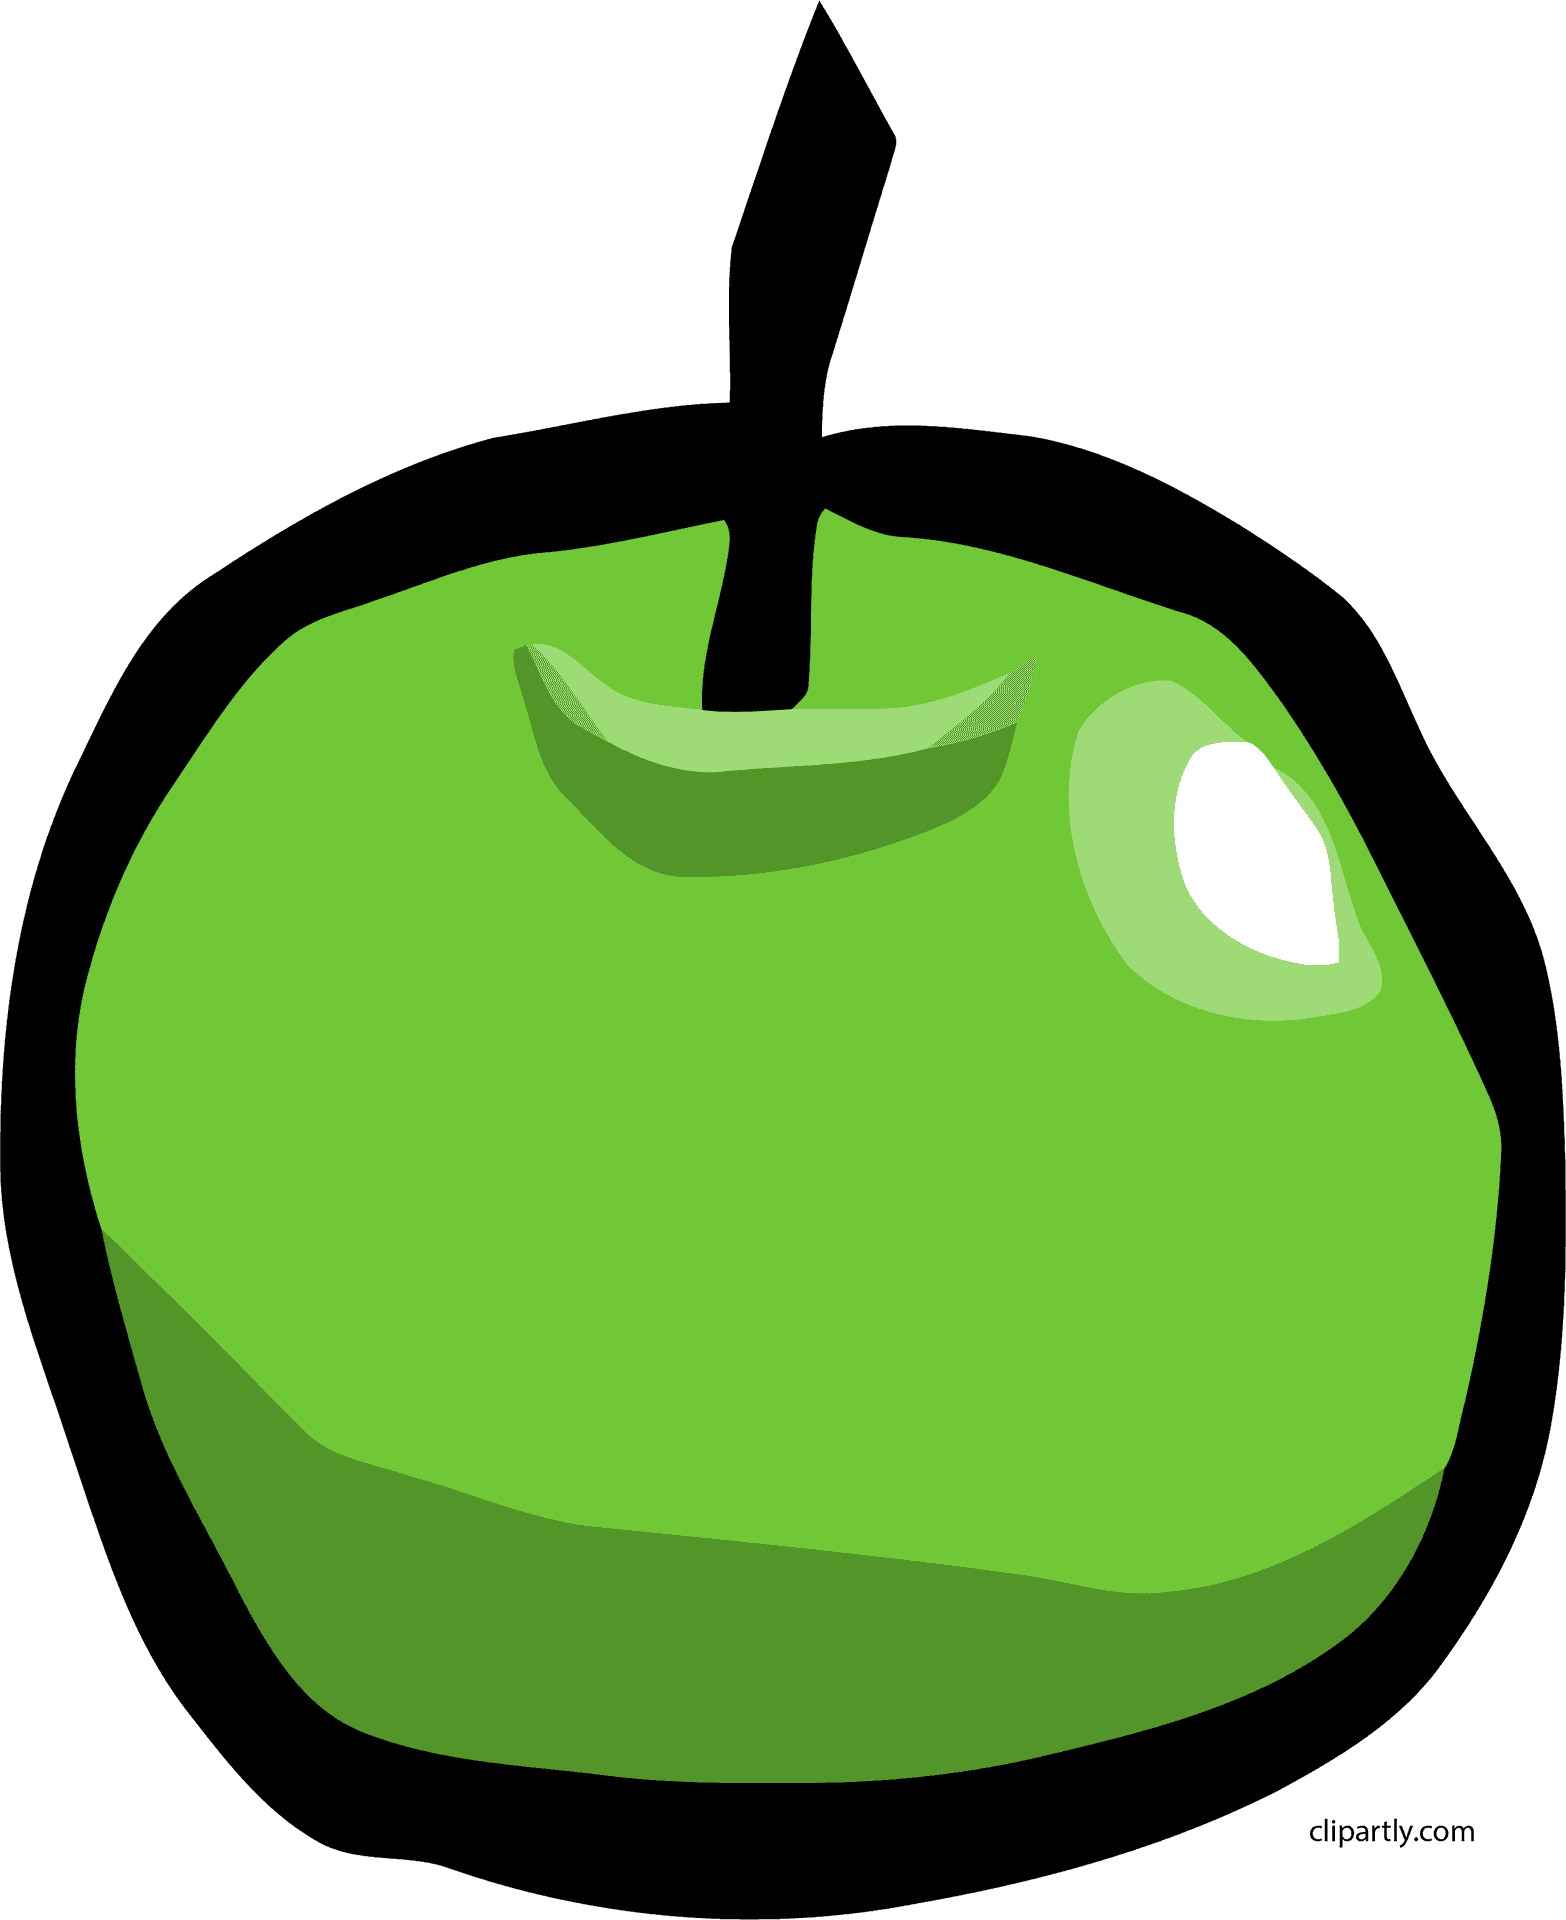 Green Apple Cartoon Illustration PNG image